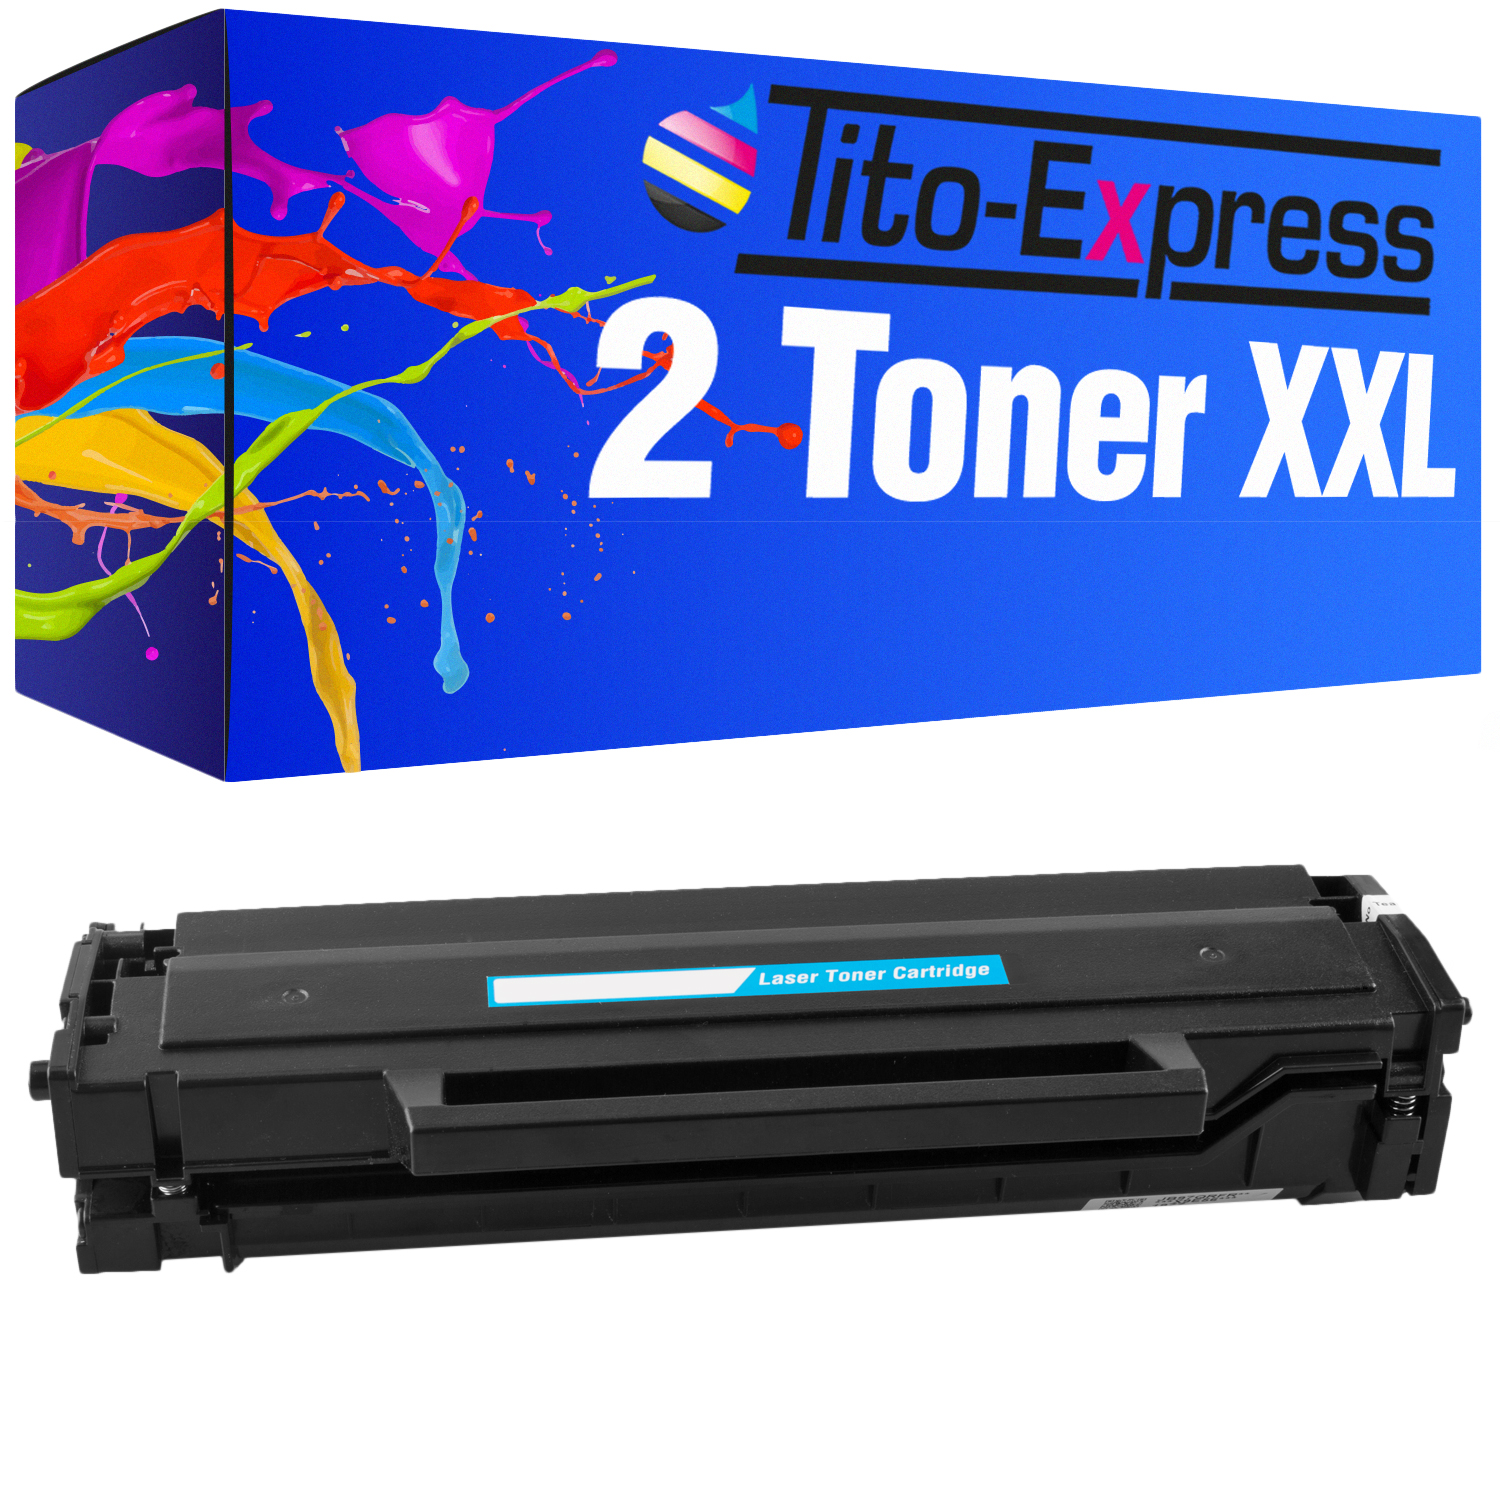 PLATINUMSERIE Toner 2 TITO-EXPRESS Samsung (SU696A) black MLT-D101S ersetzt Toner